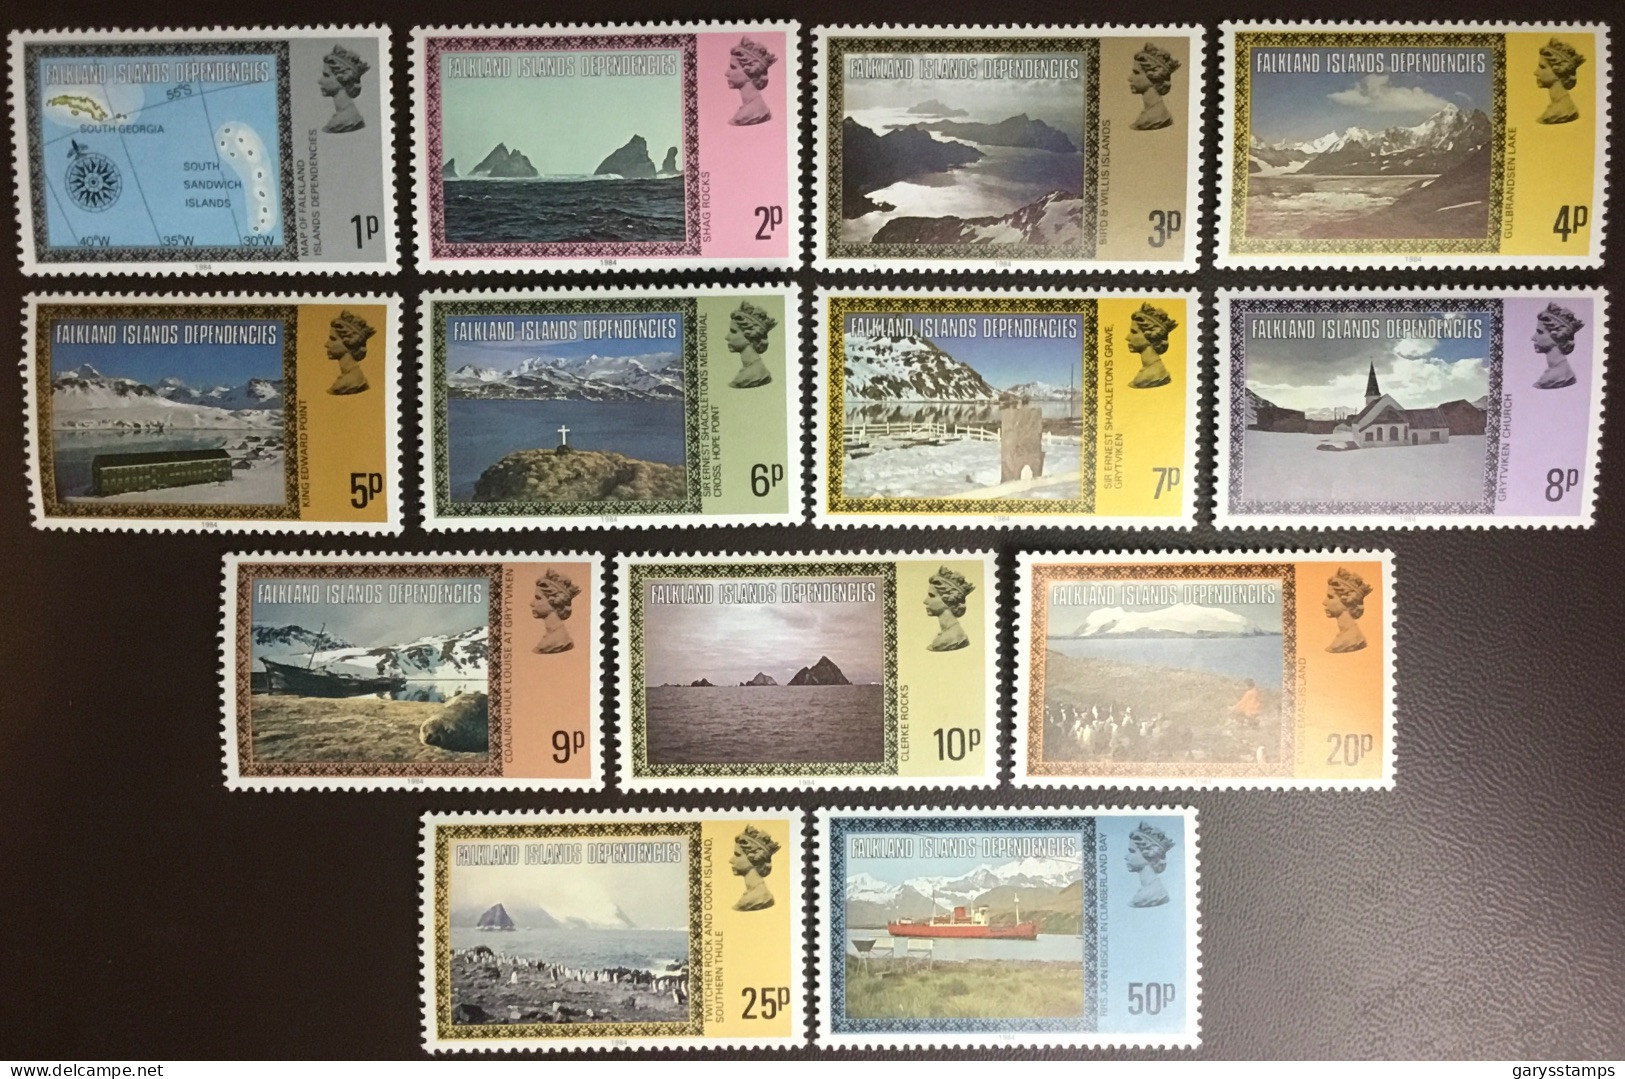 Falkland Islands Dependencies 1984 Definitives Set With Imprint Date MNH - South Georgia